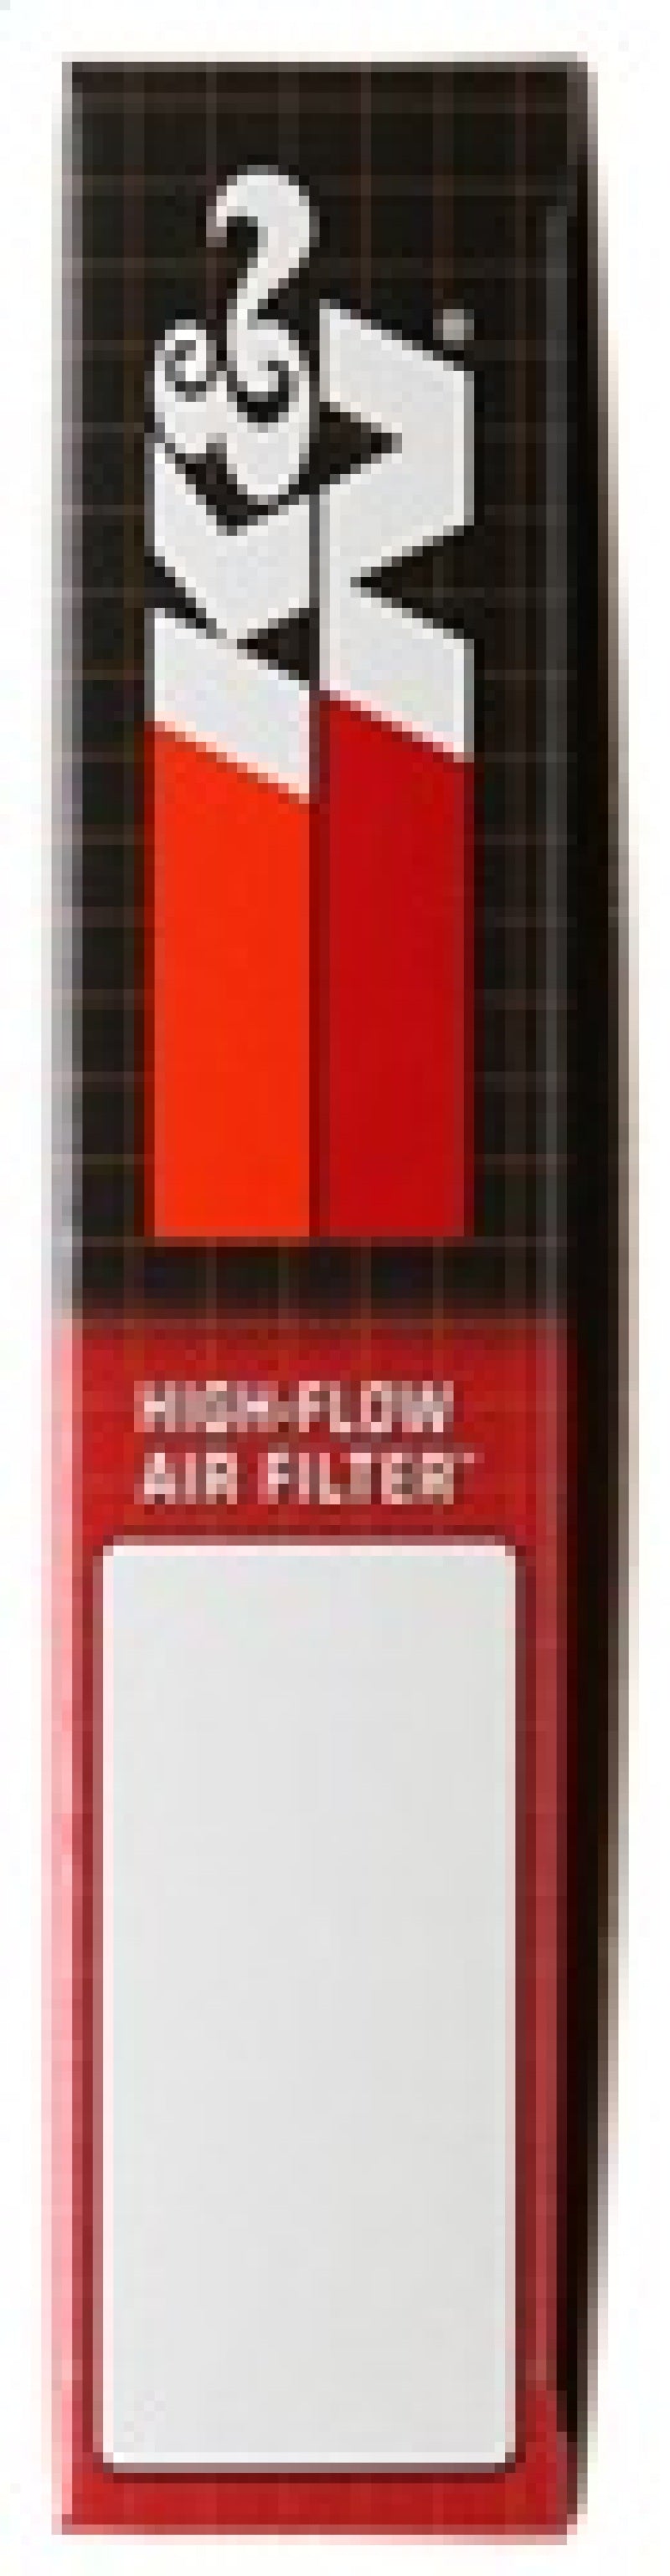 K&N Replacement Air Filter CHEVY CAMARO 3.8/5.7L 98-07, PONTIAC FIREBIRD 3.8/5.7L 98-02